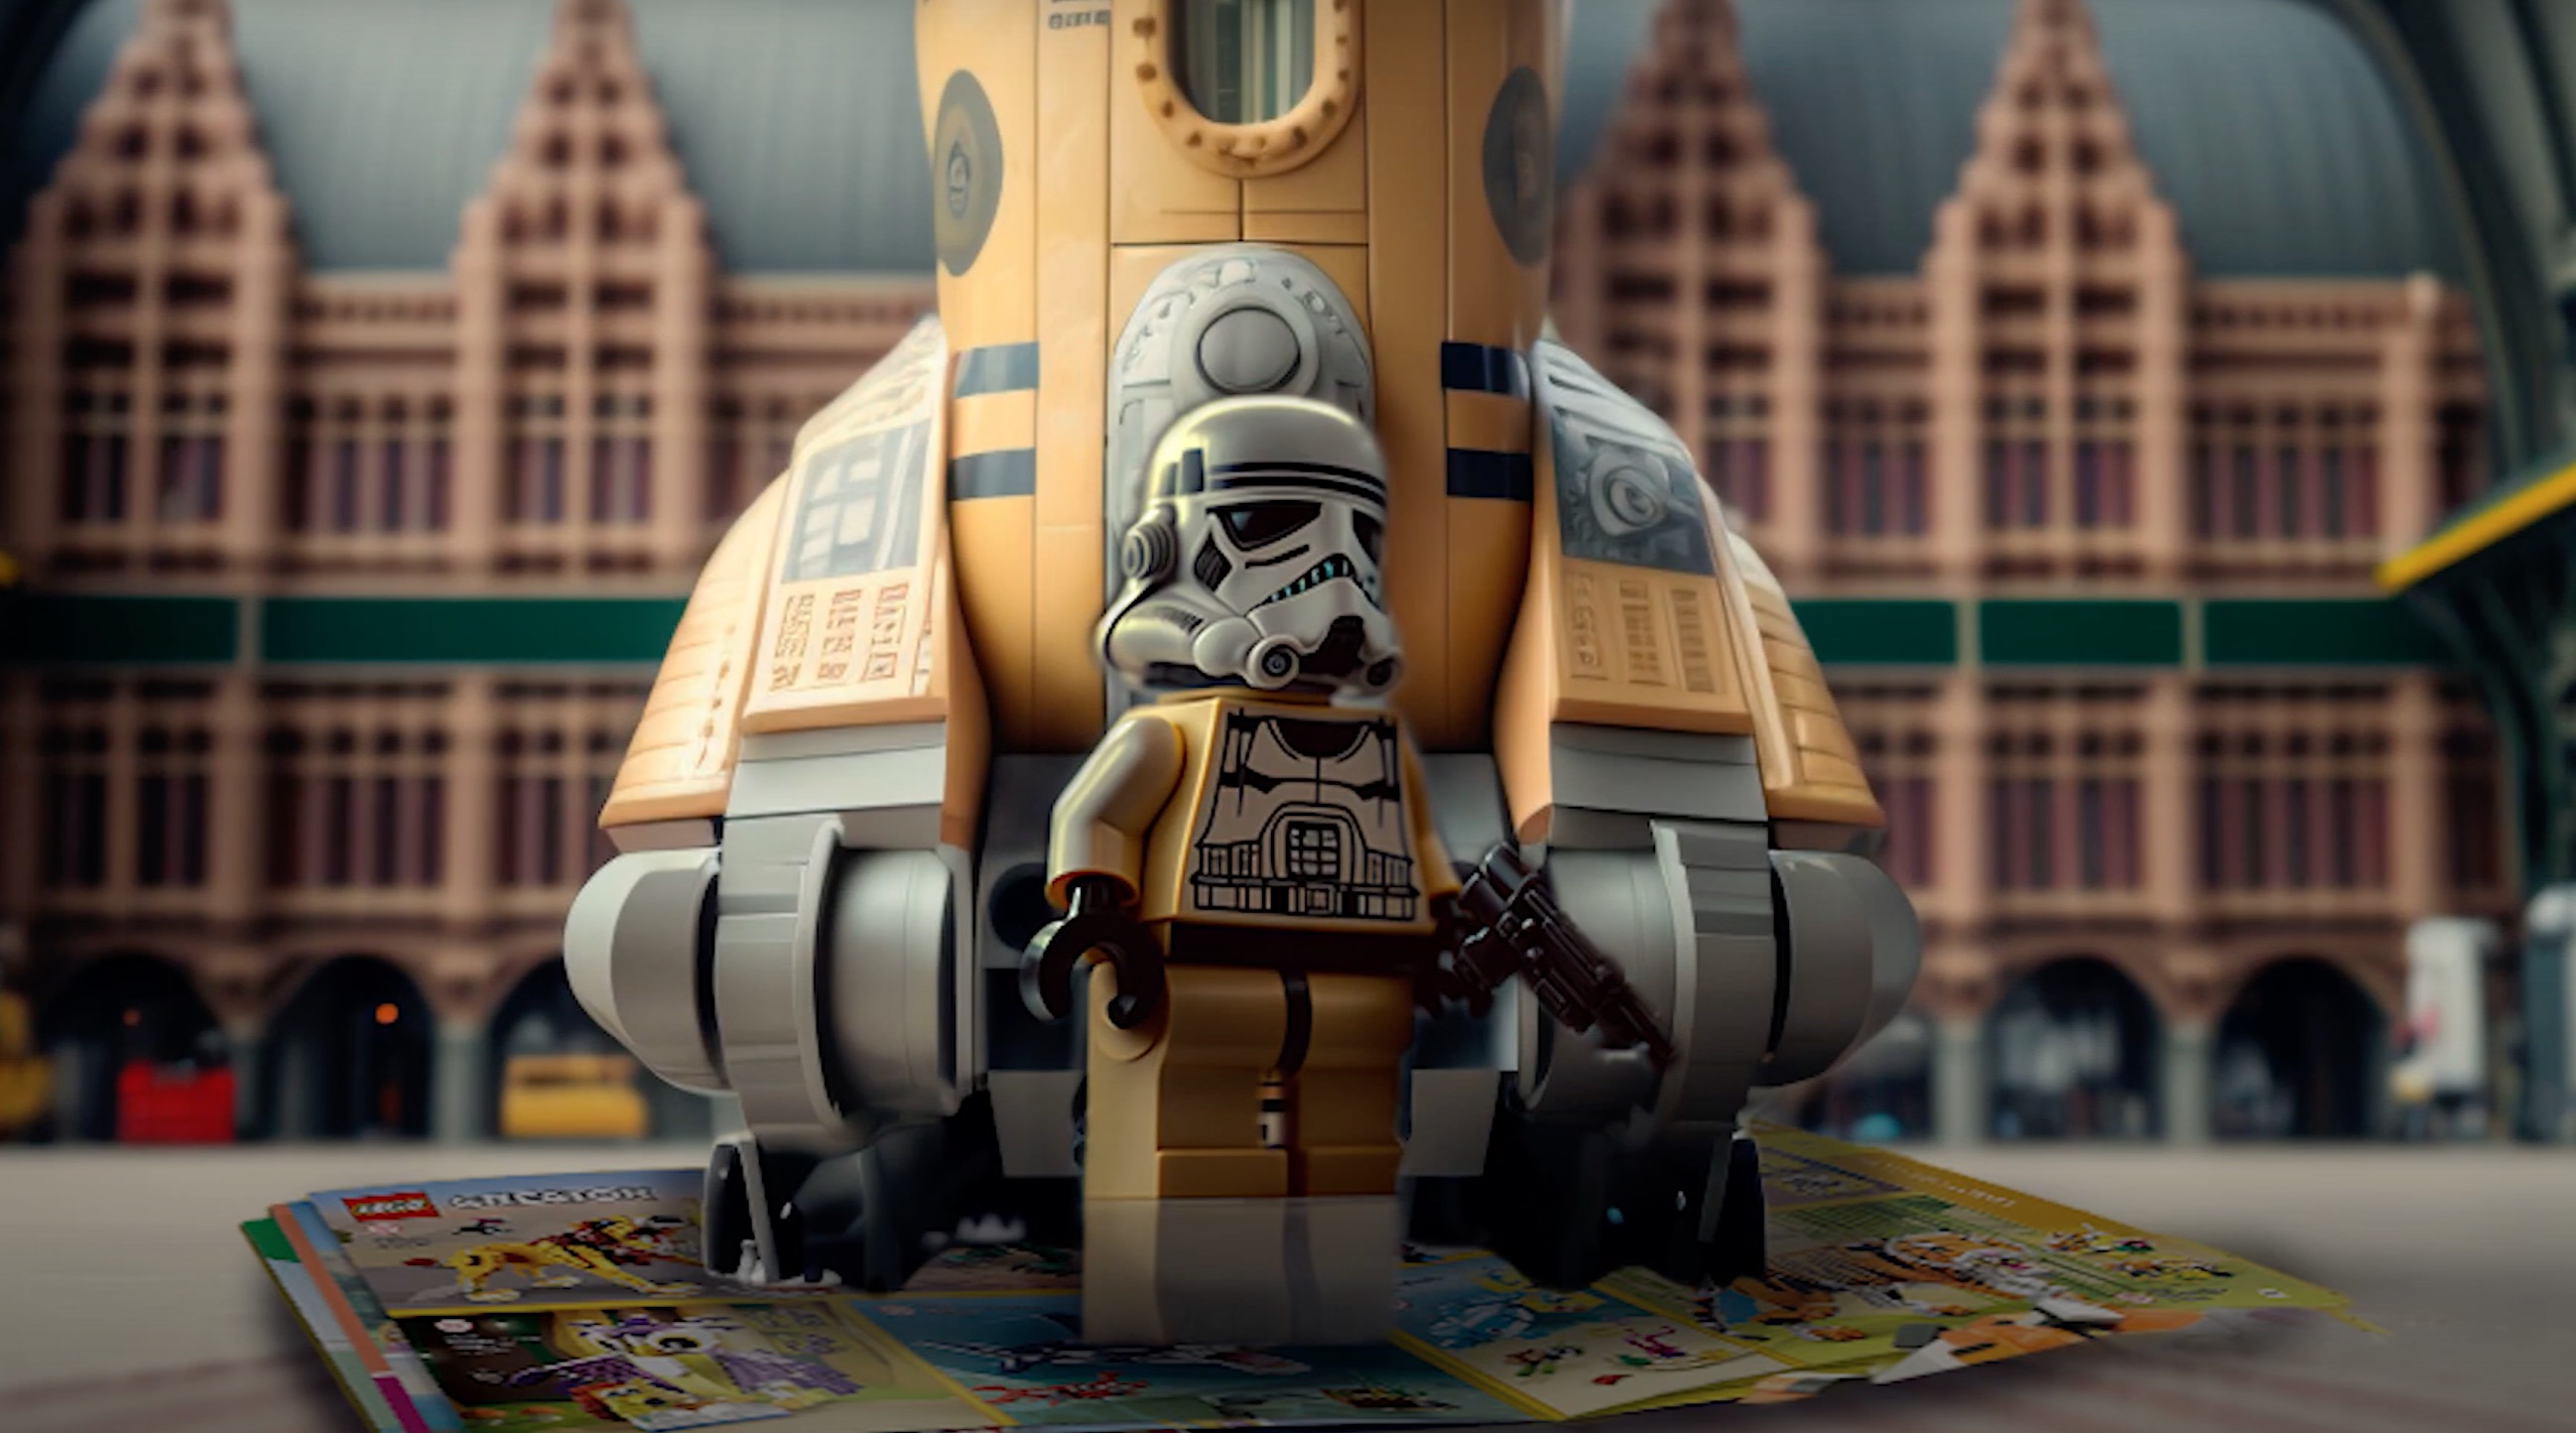 Thomas More wint Ad Venture-competitie met Lego